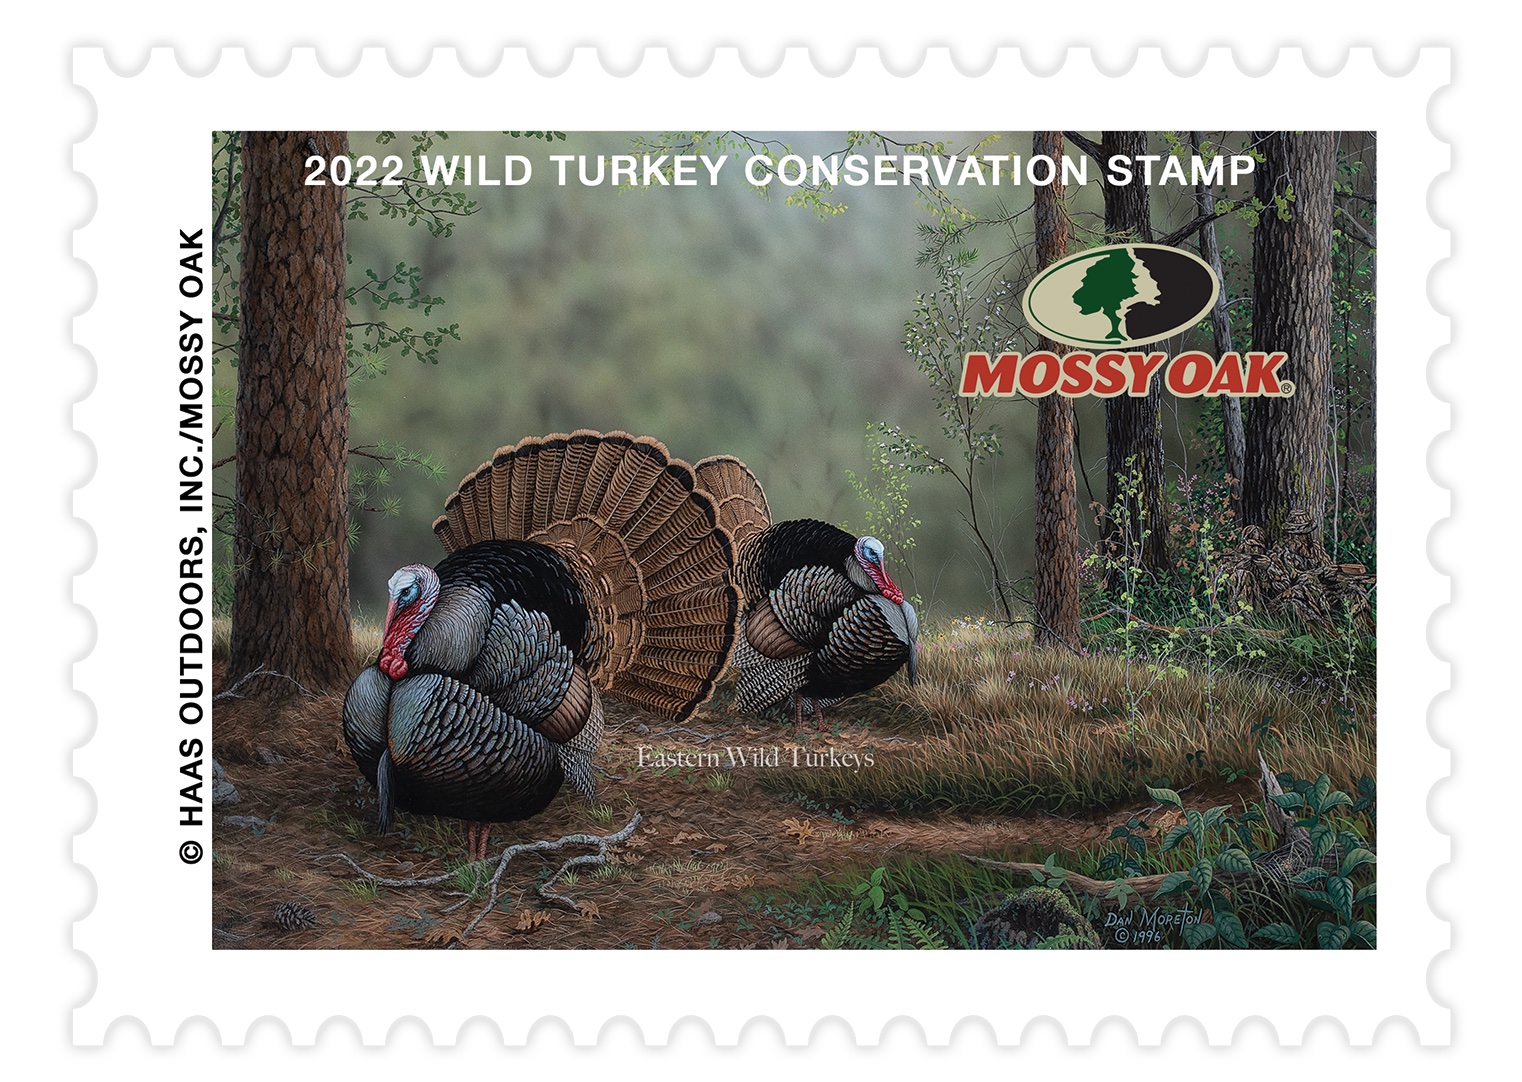 the mossy oak wild turkey stamp